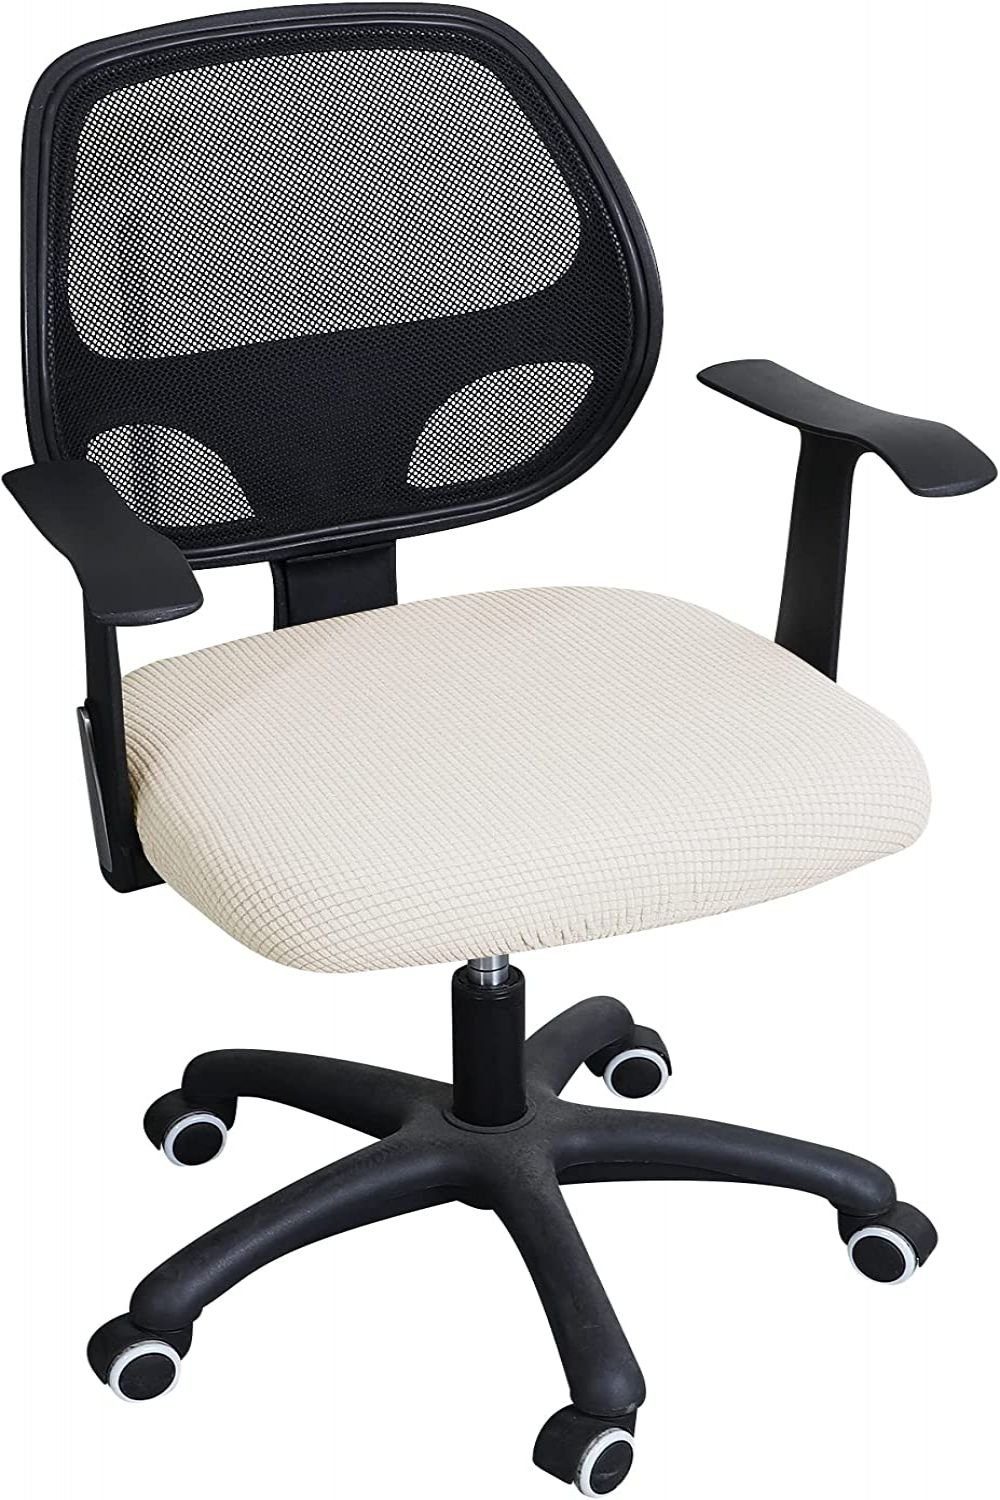 Stuhlhusse Sitzbezüge für Bürostuhl, Jormftte abnehmbar, waschbar